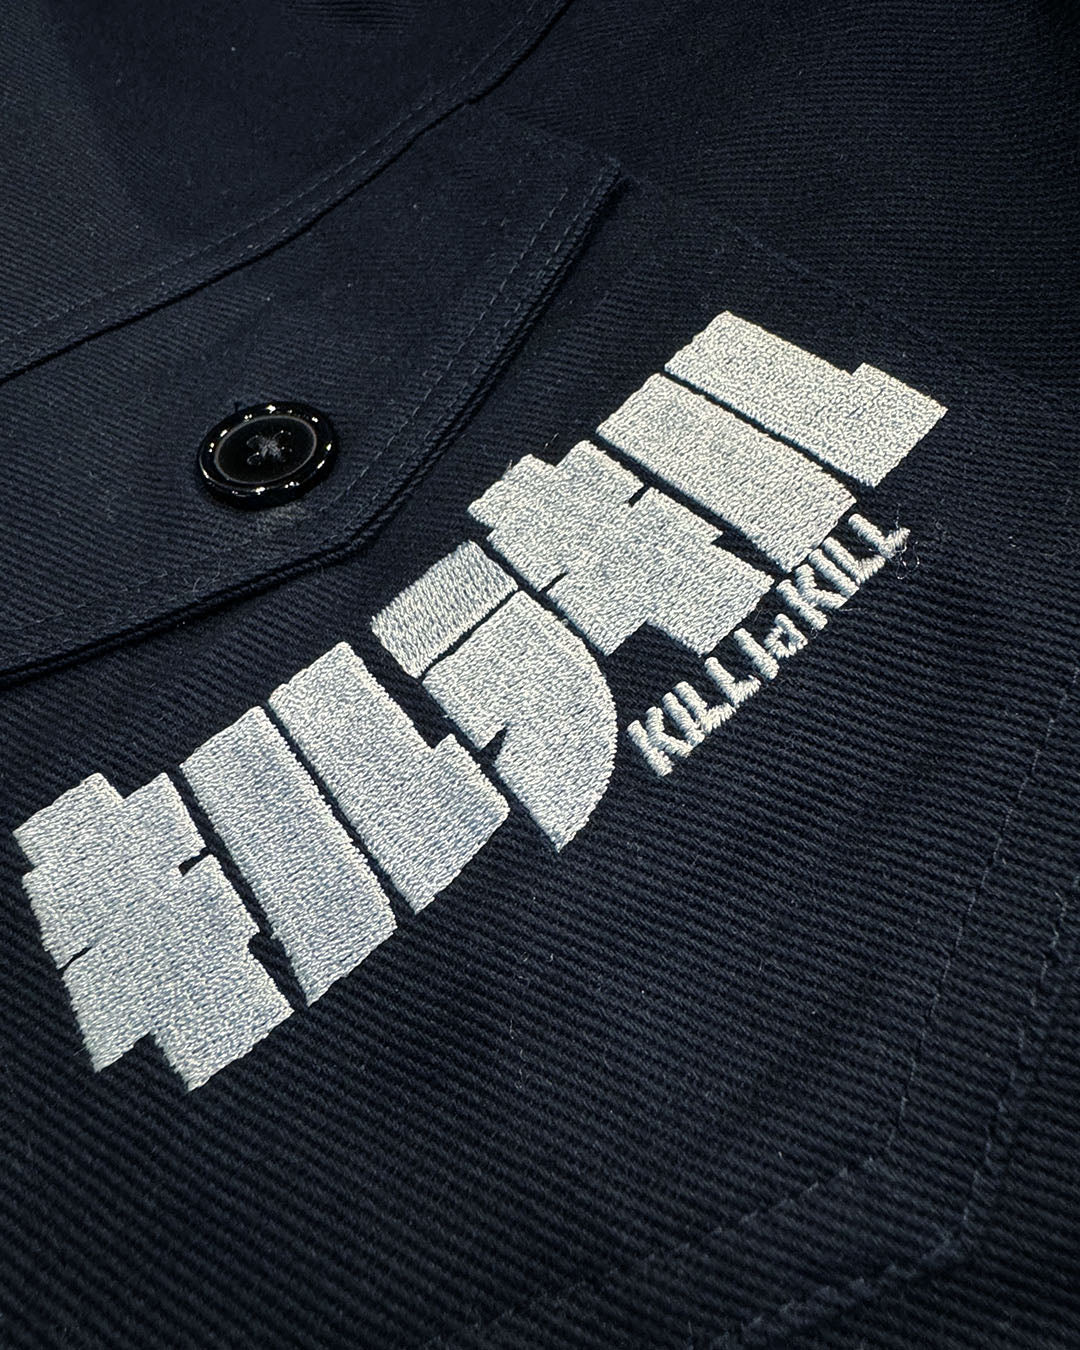 Kill la Kill - Mako Navy Denim Jacket